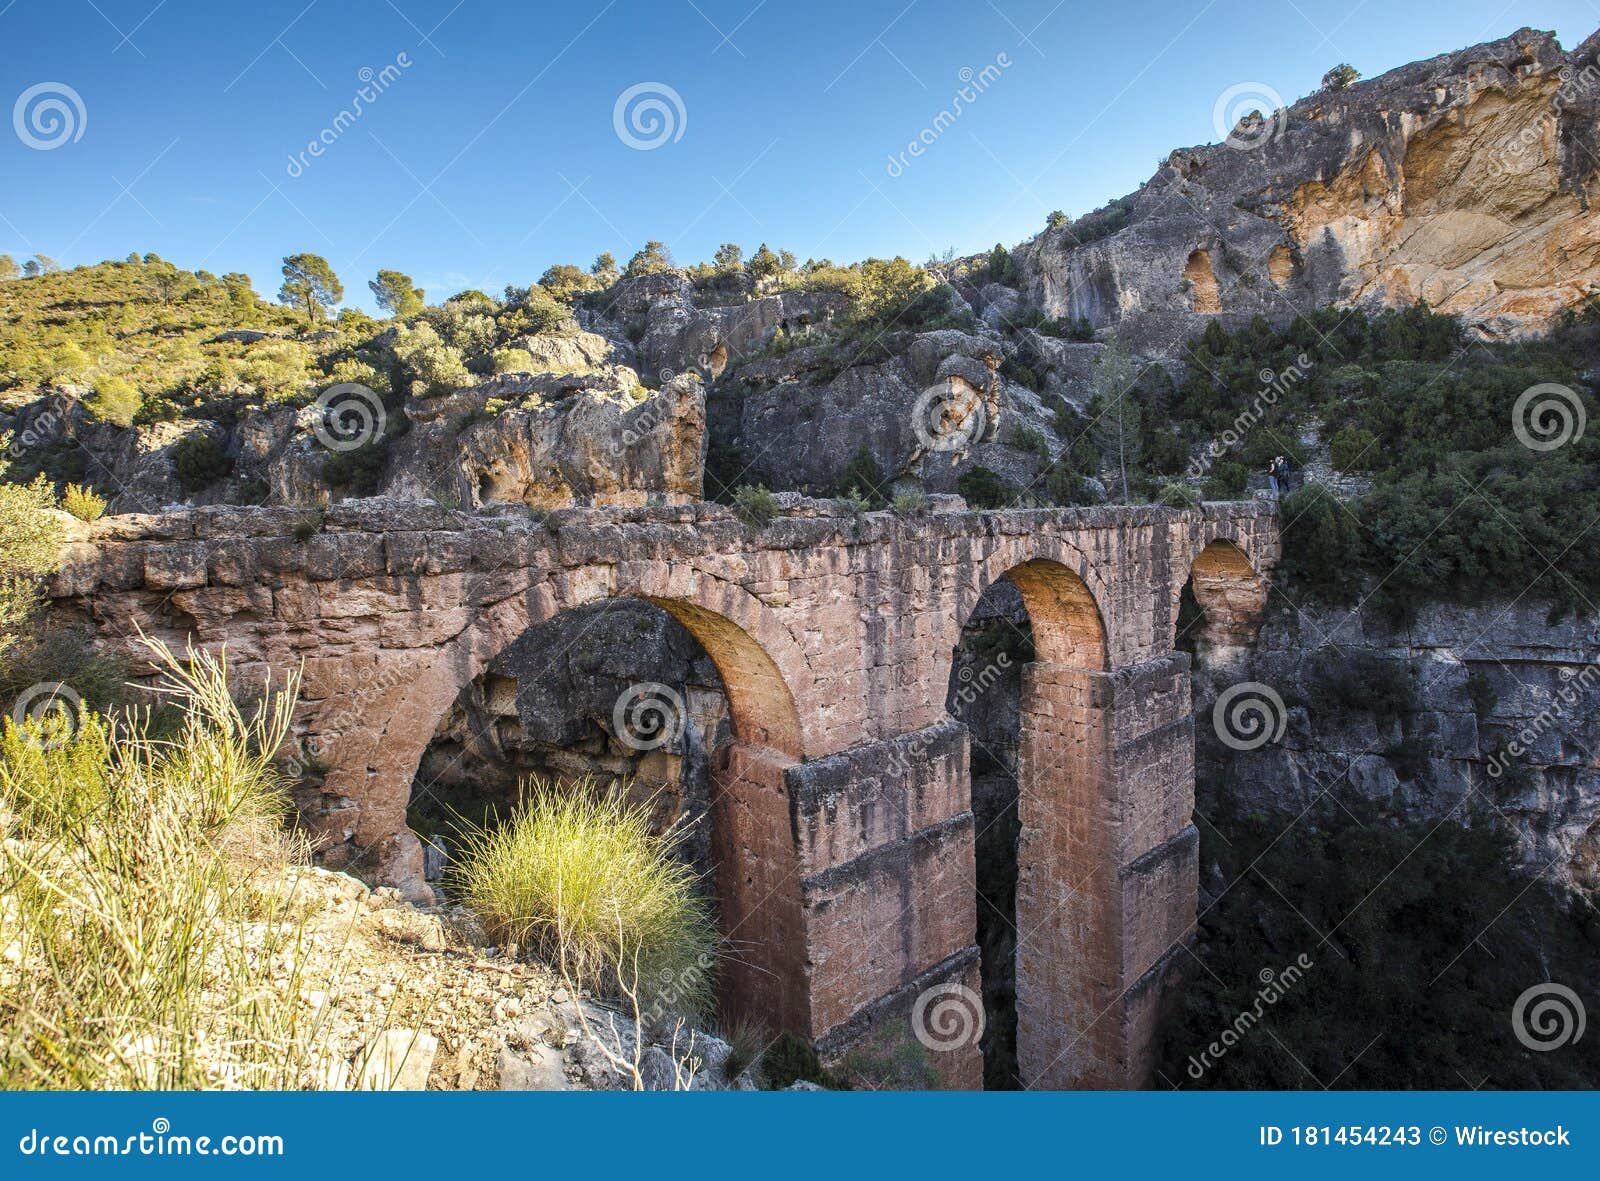 beautiful view of the pena cortada bridge among the mountains captured in chelva, valencia, spain